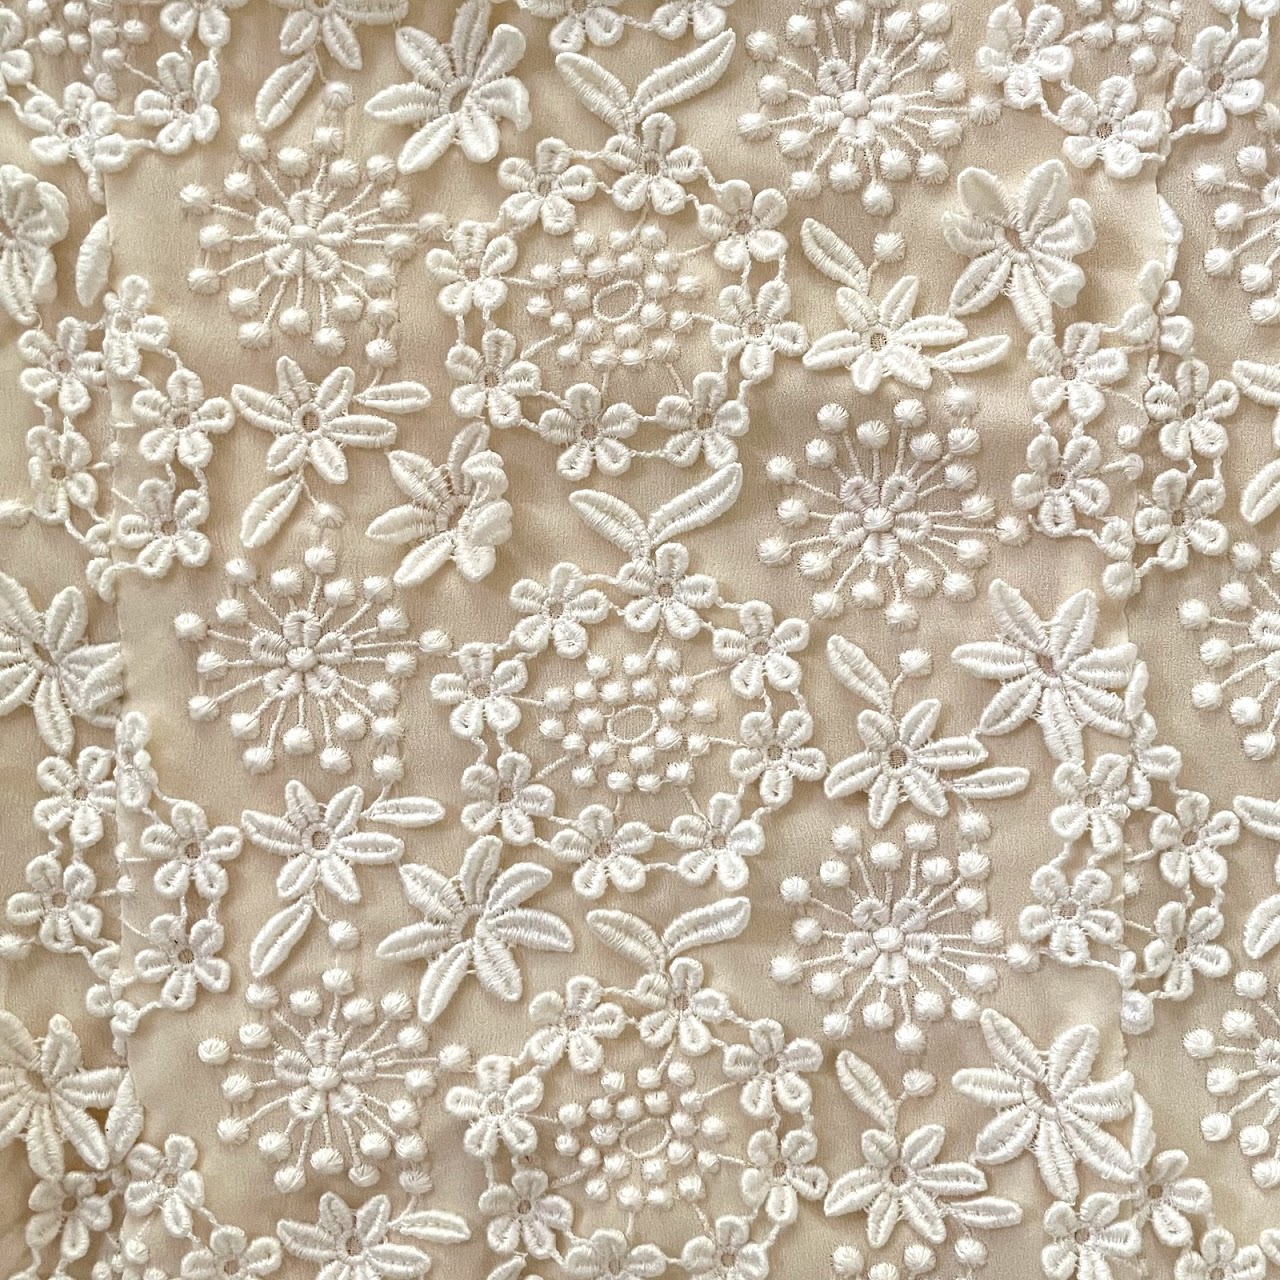 Prada Floral Embroidered Sheath Dress